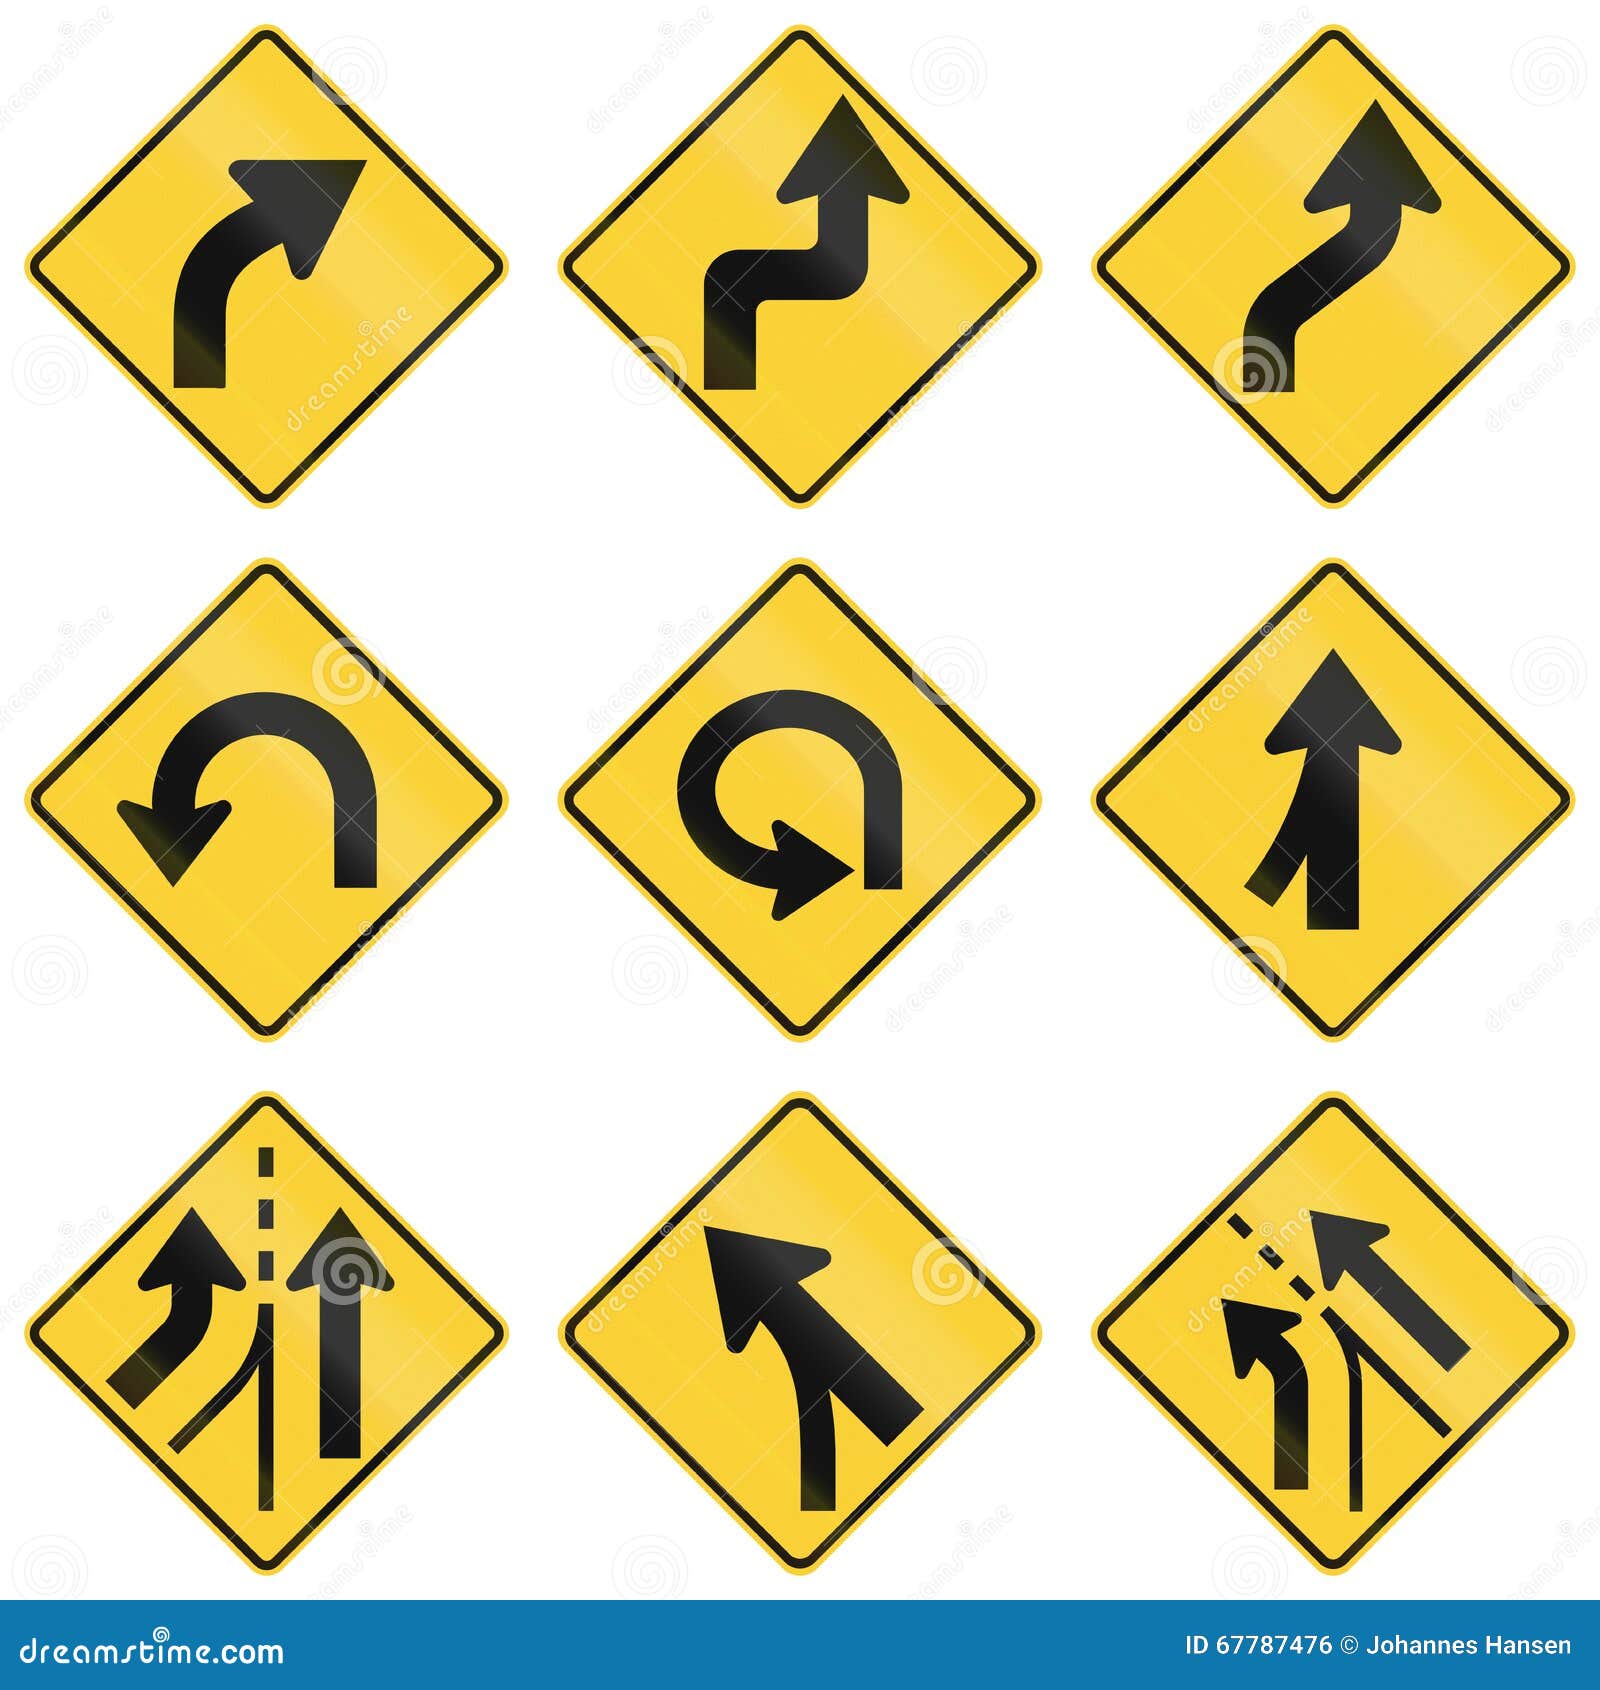 Standard Traffic Signs Mutcd Compliant Traffic Safety - vrogue.co